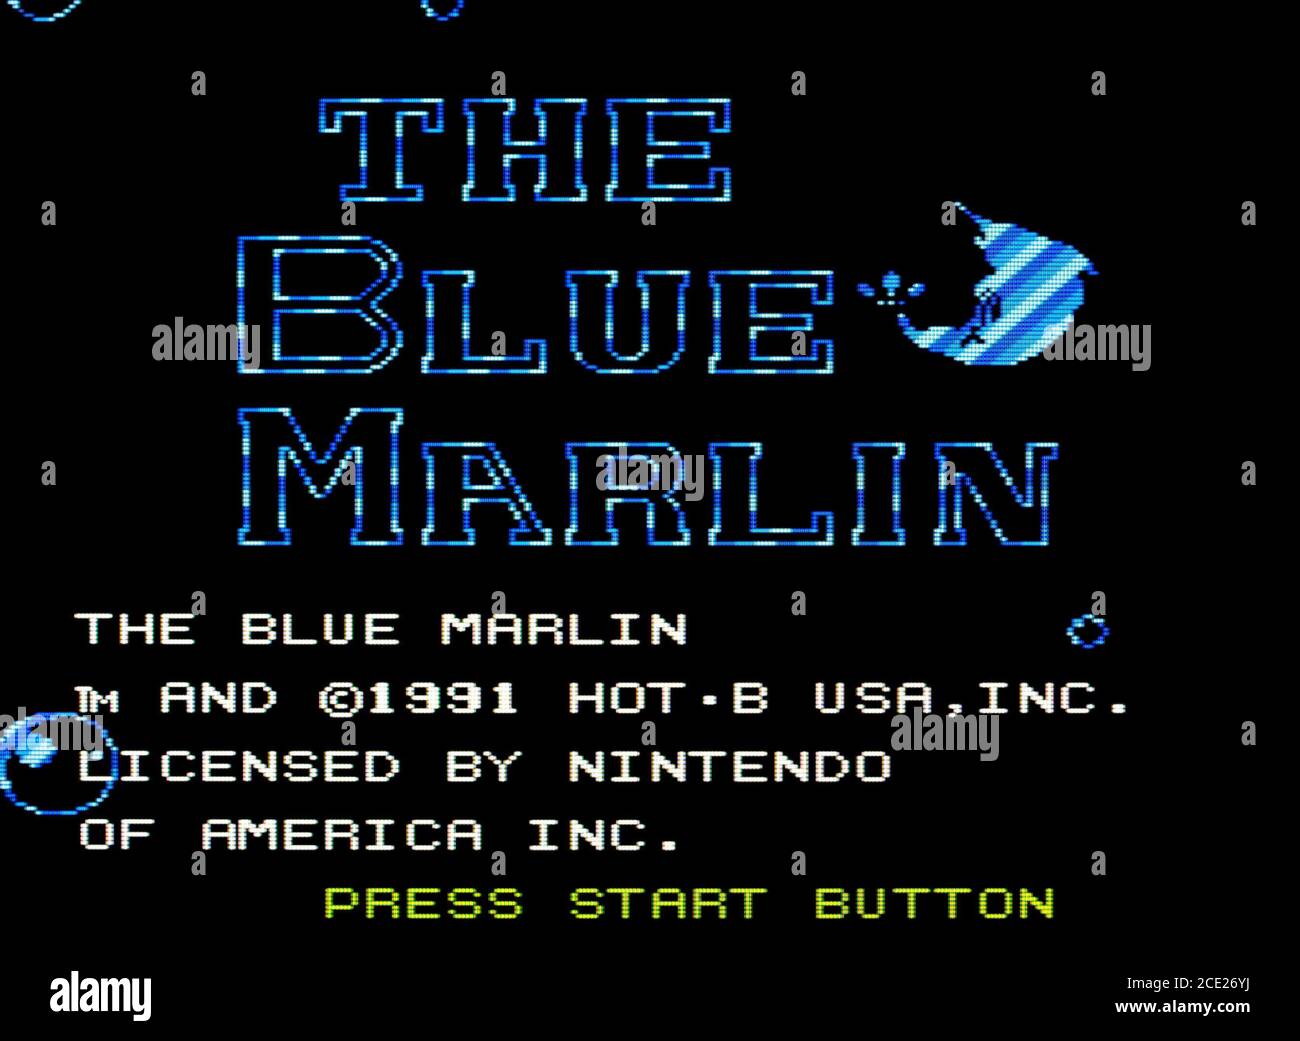 The Blue Marlin - Nintendo Entertainment System - NES Videogame - usage éditorial seulement Banque D'Images